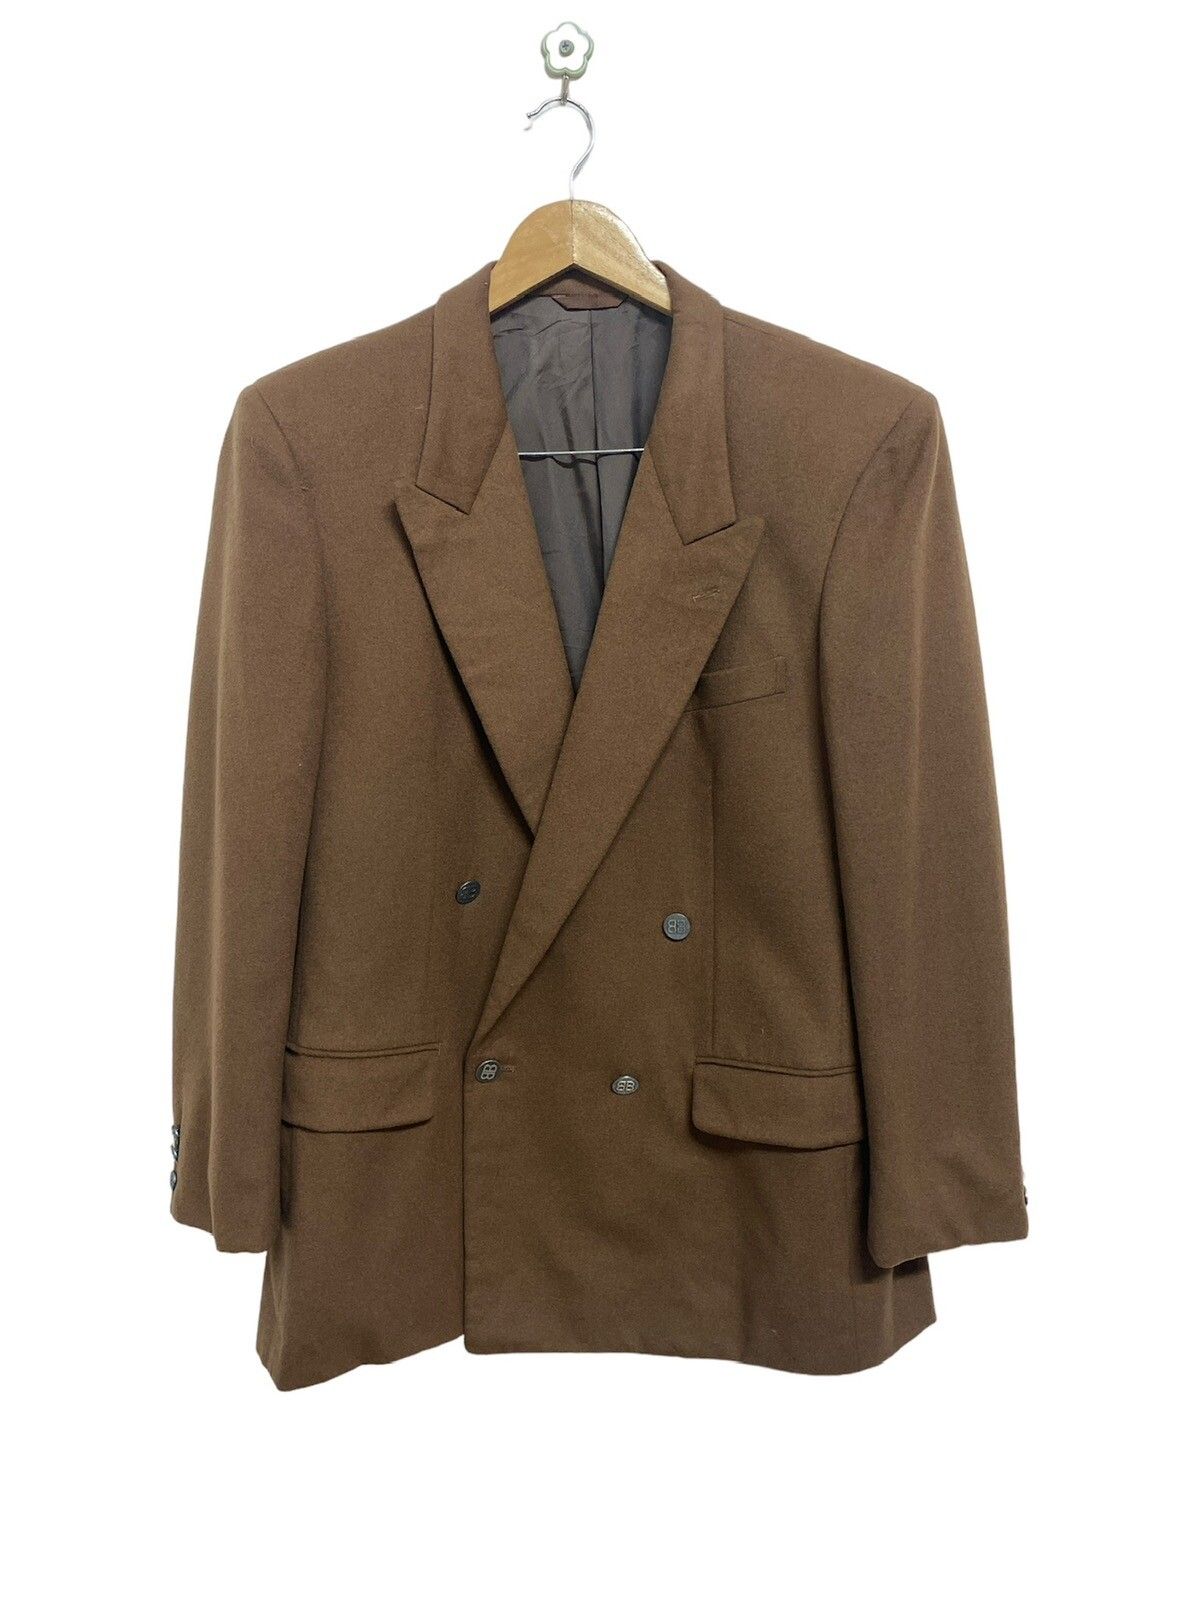 Vintage Balenciaga Cashmere Blazer Suit Jacket - 1